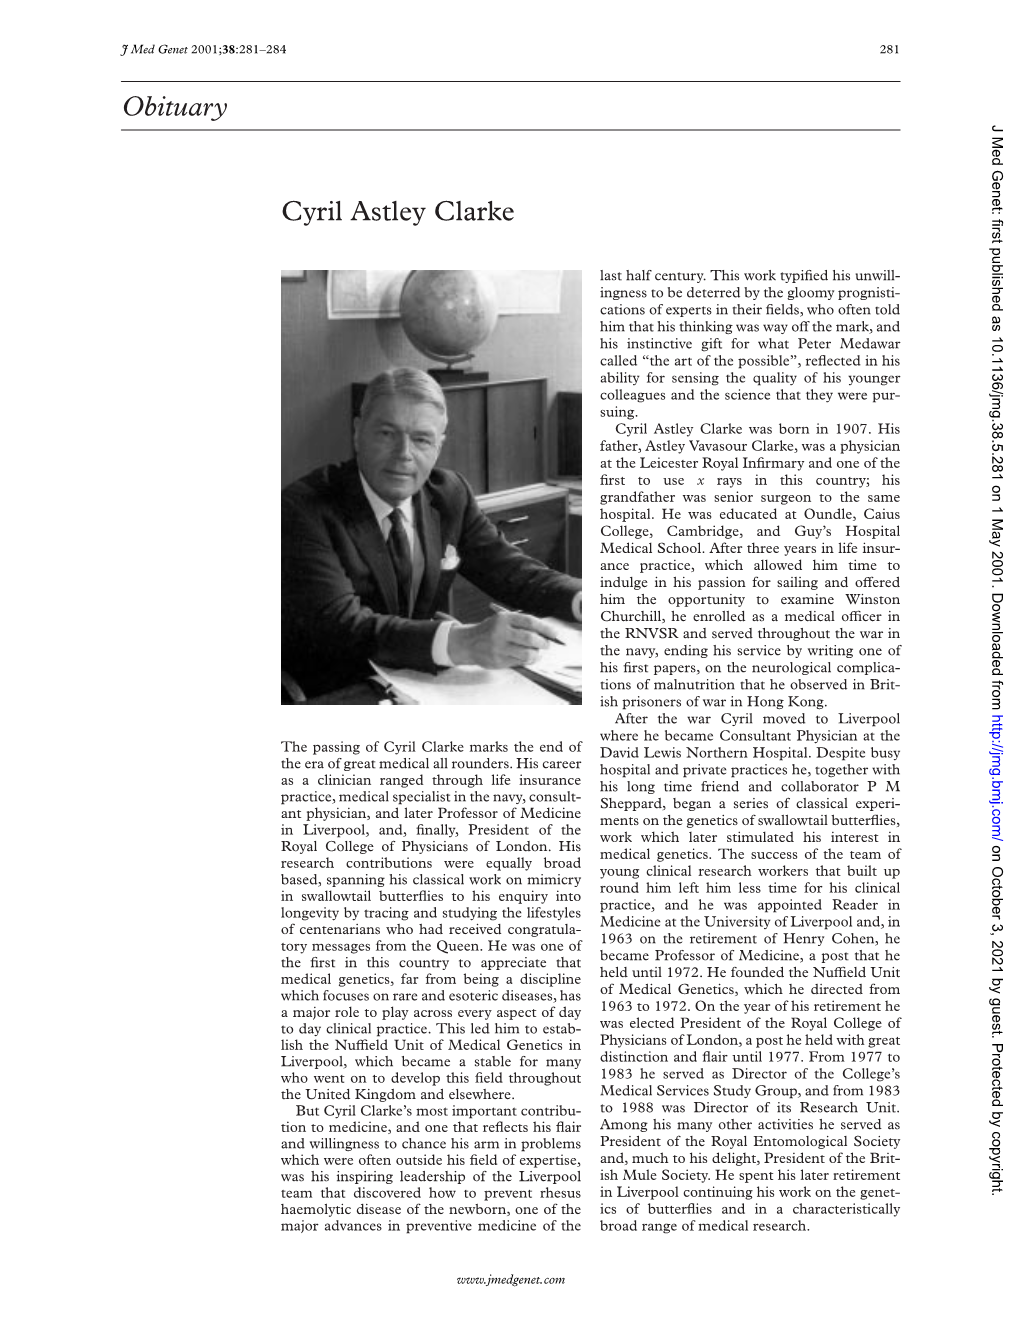 Obituary Cyril Astley Clarke